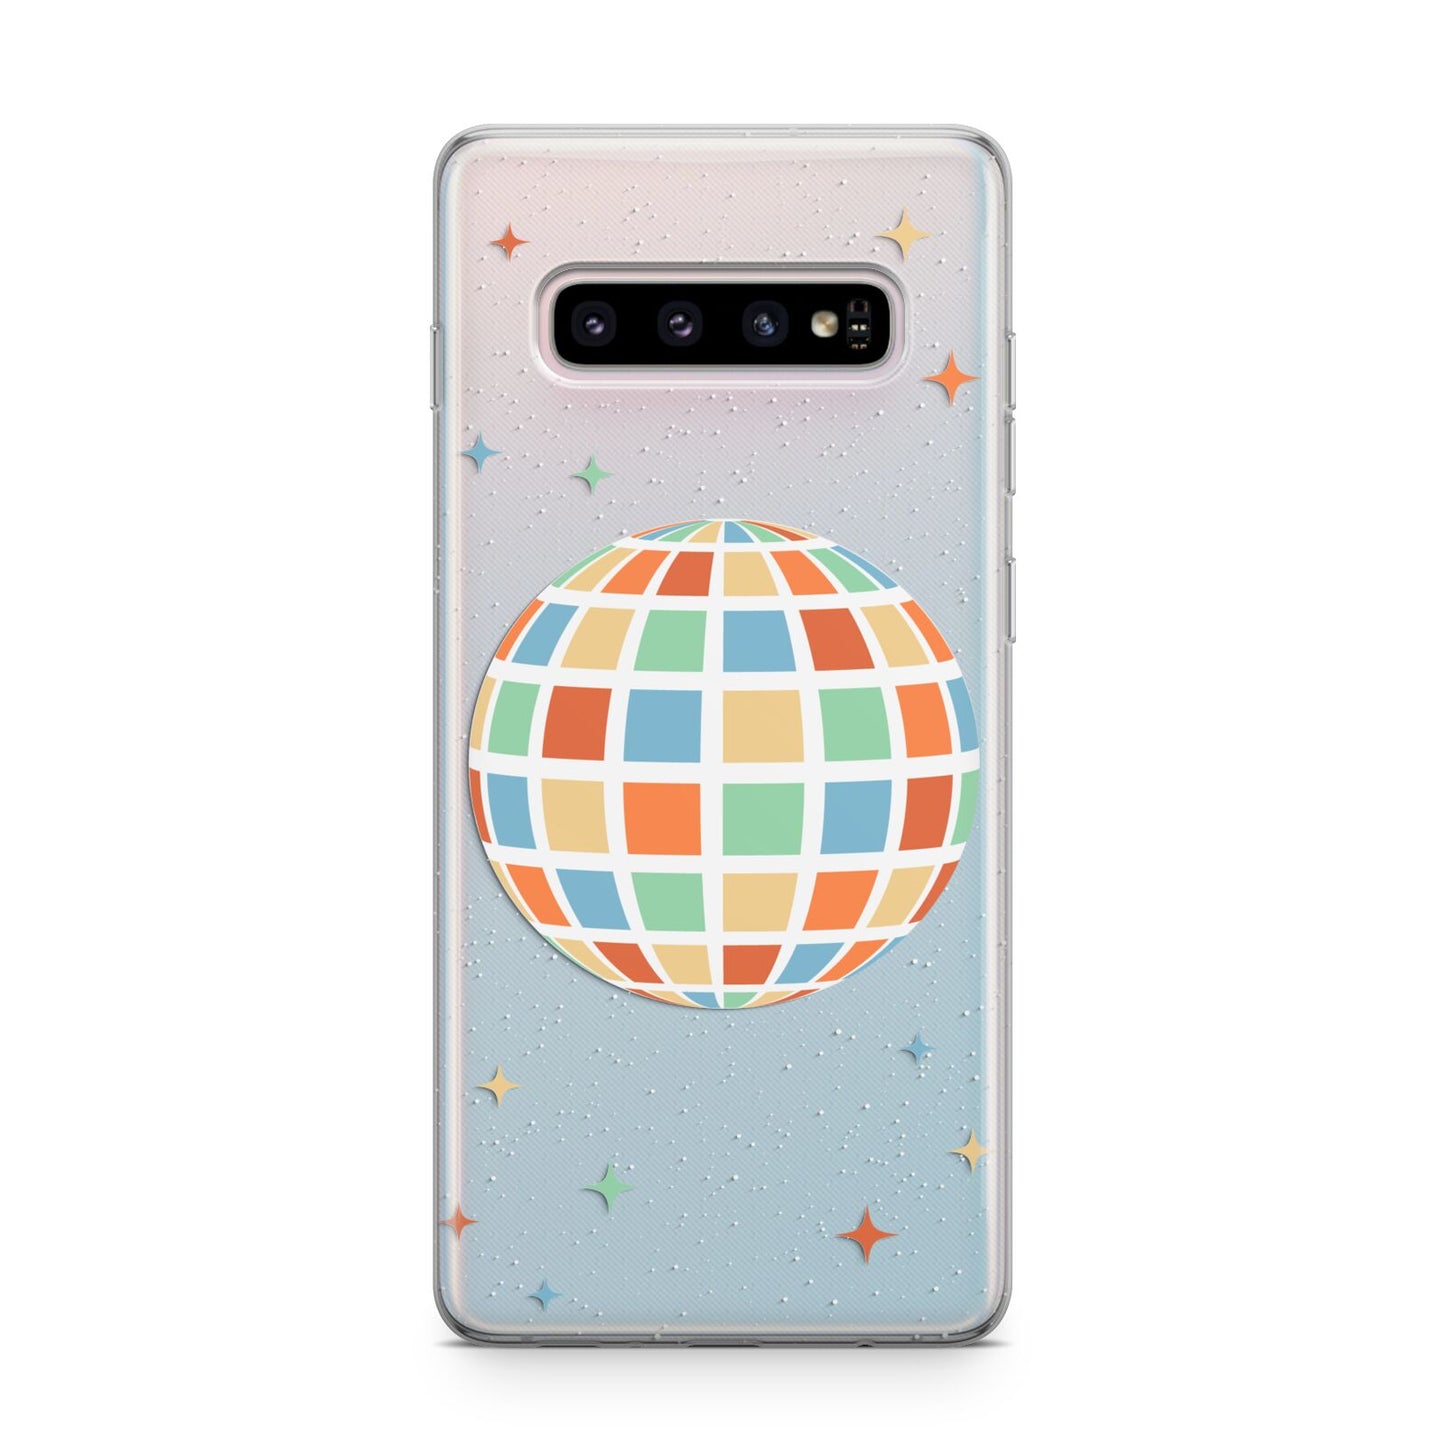 Disco Ball Samsung Galaxy S10 Plus Case